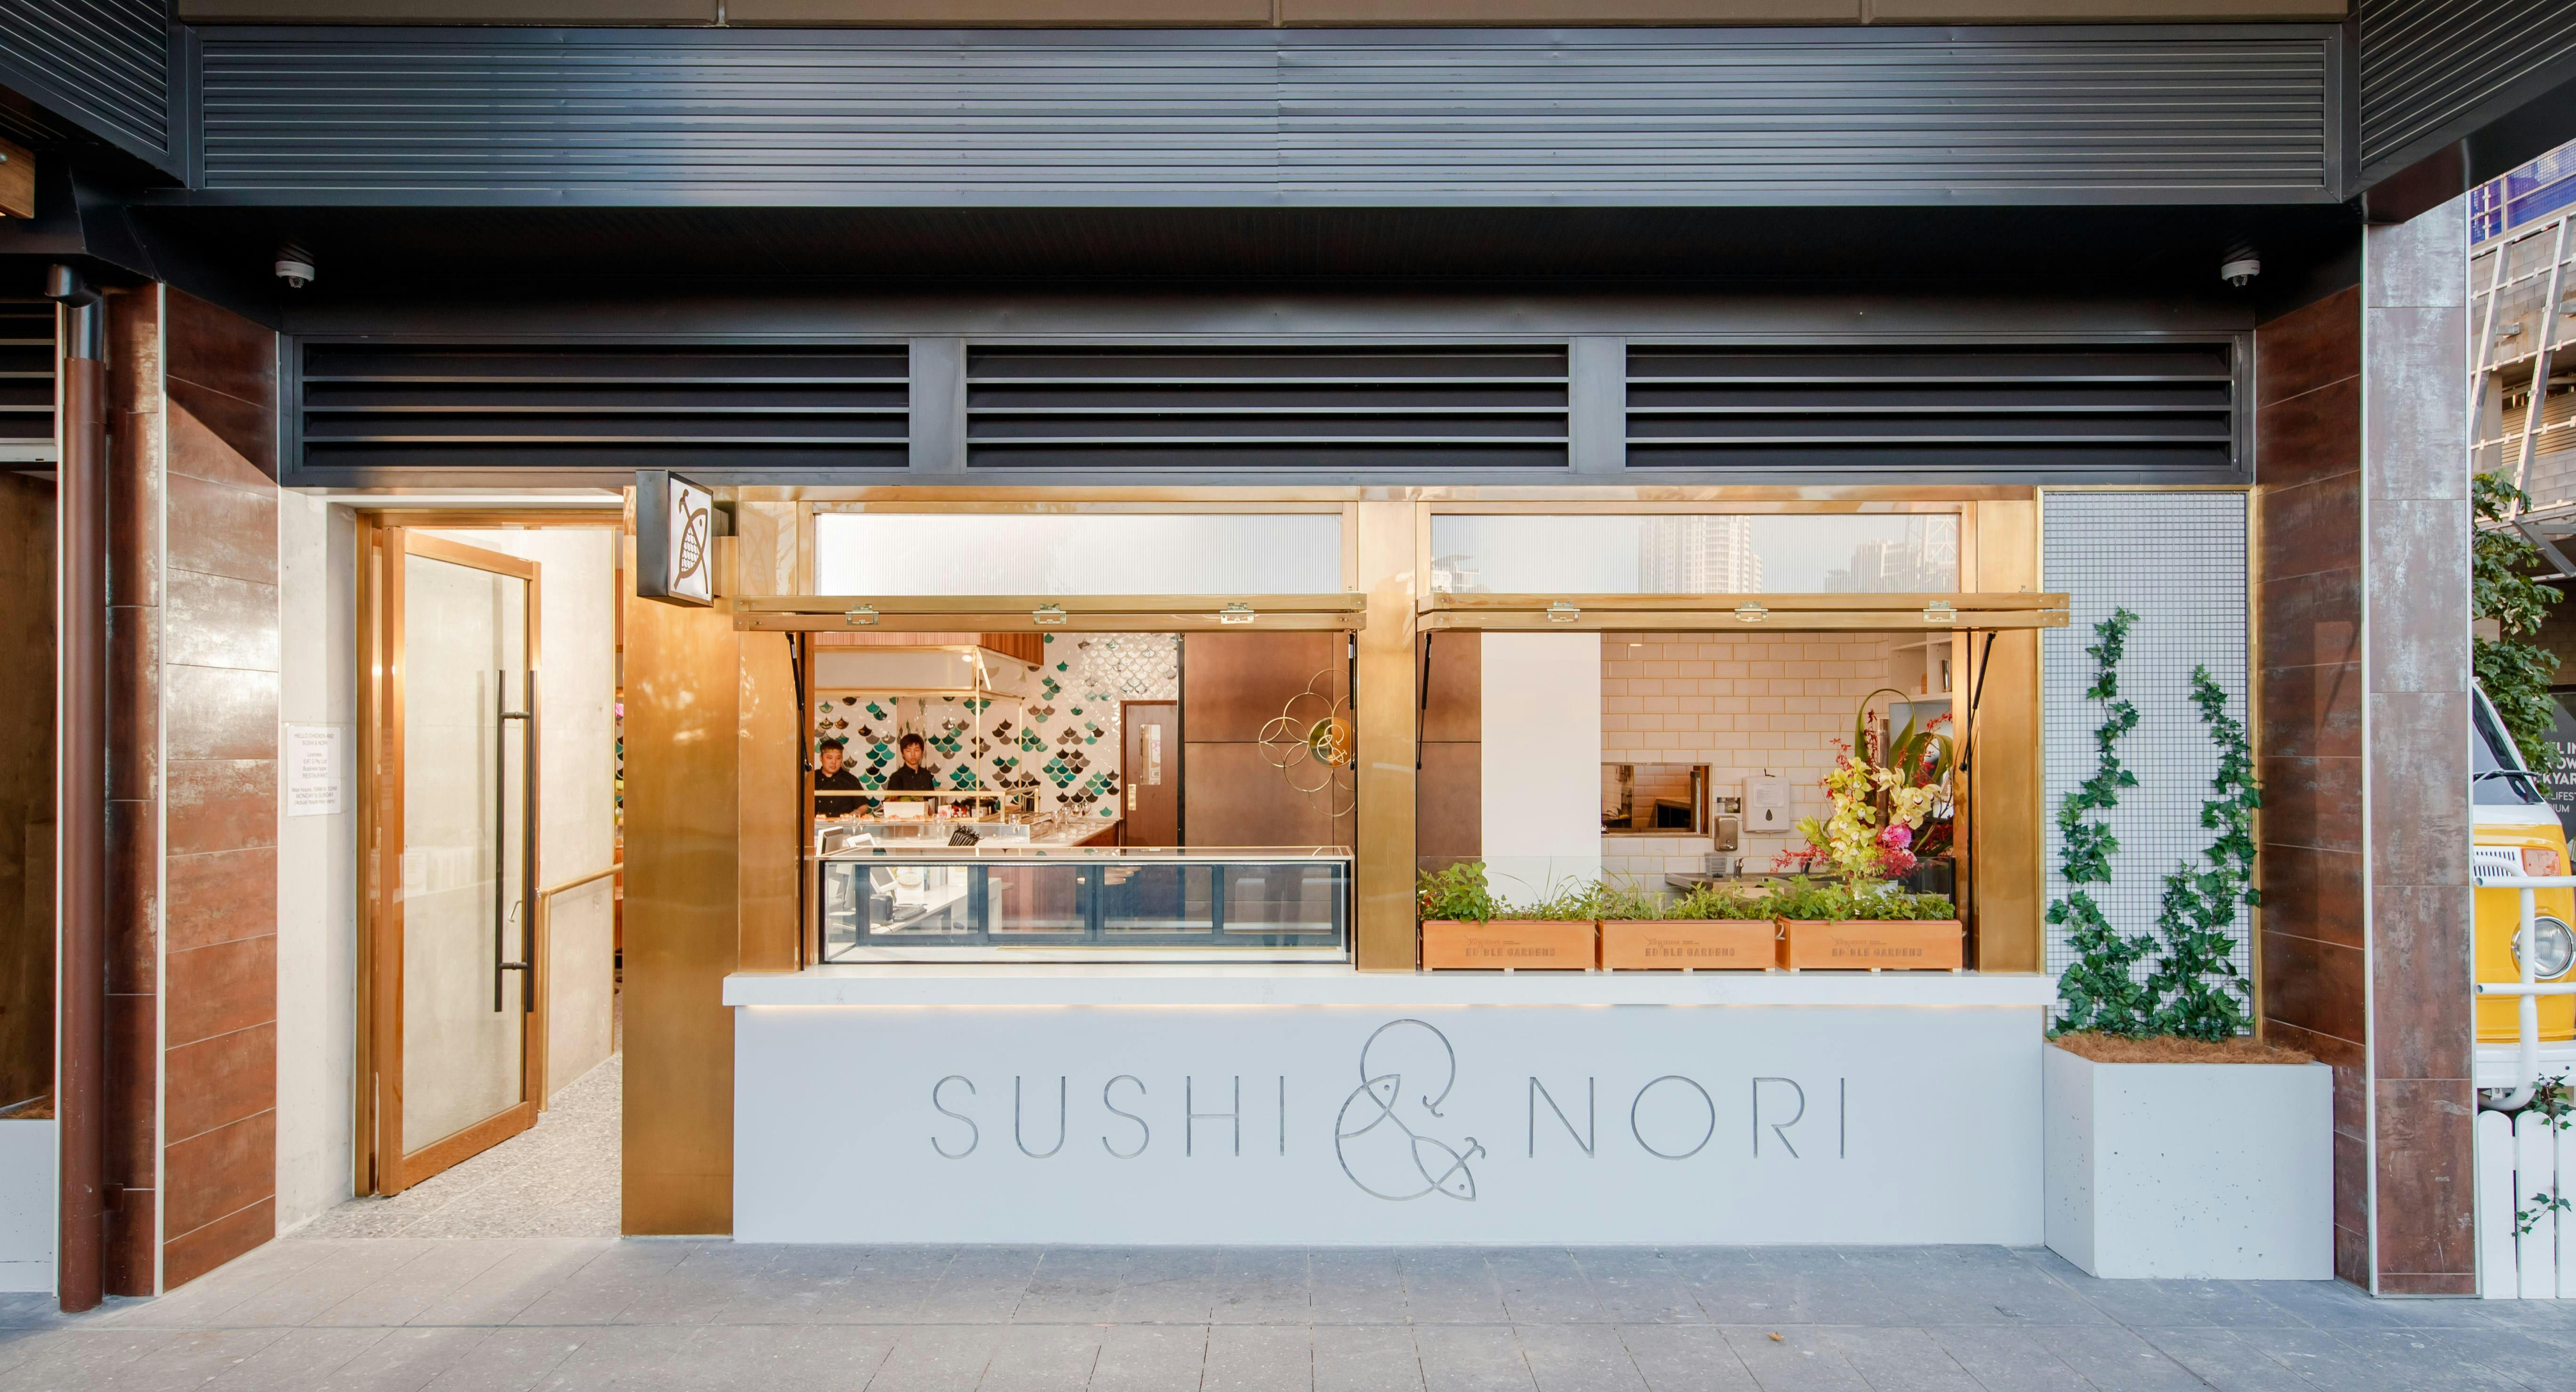 Photo of restaurant SUSHI & NORI in Bowen Hills, Brisbane